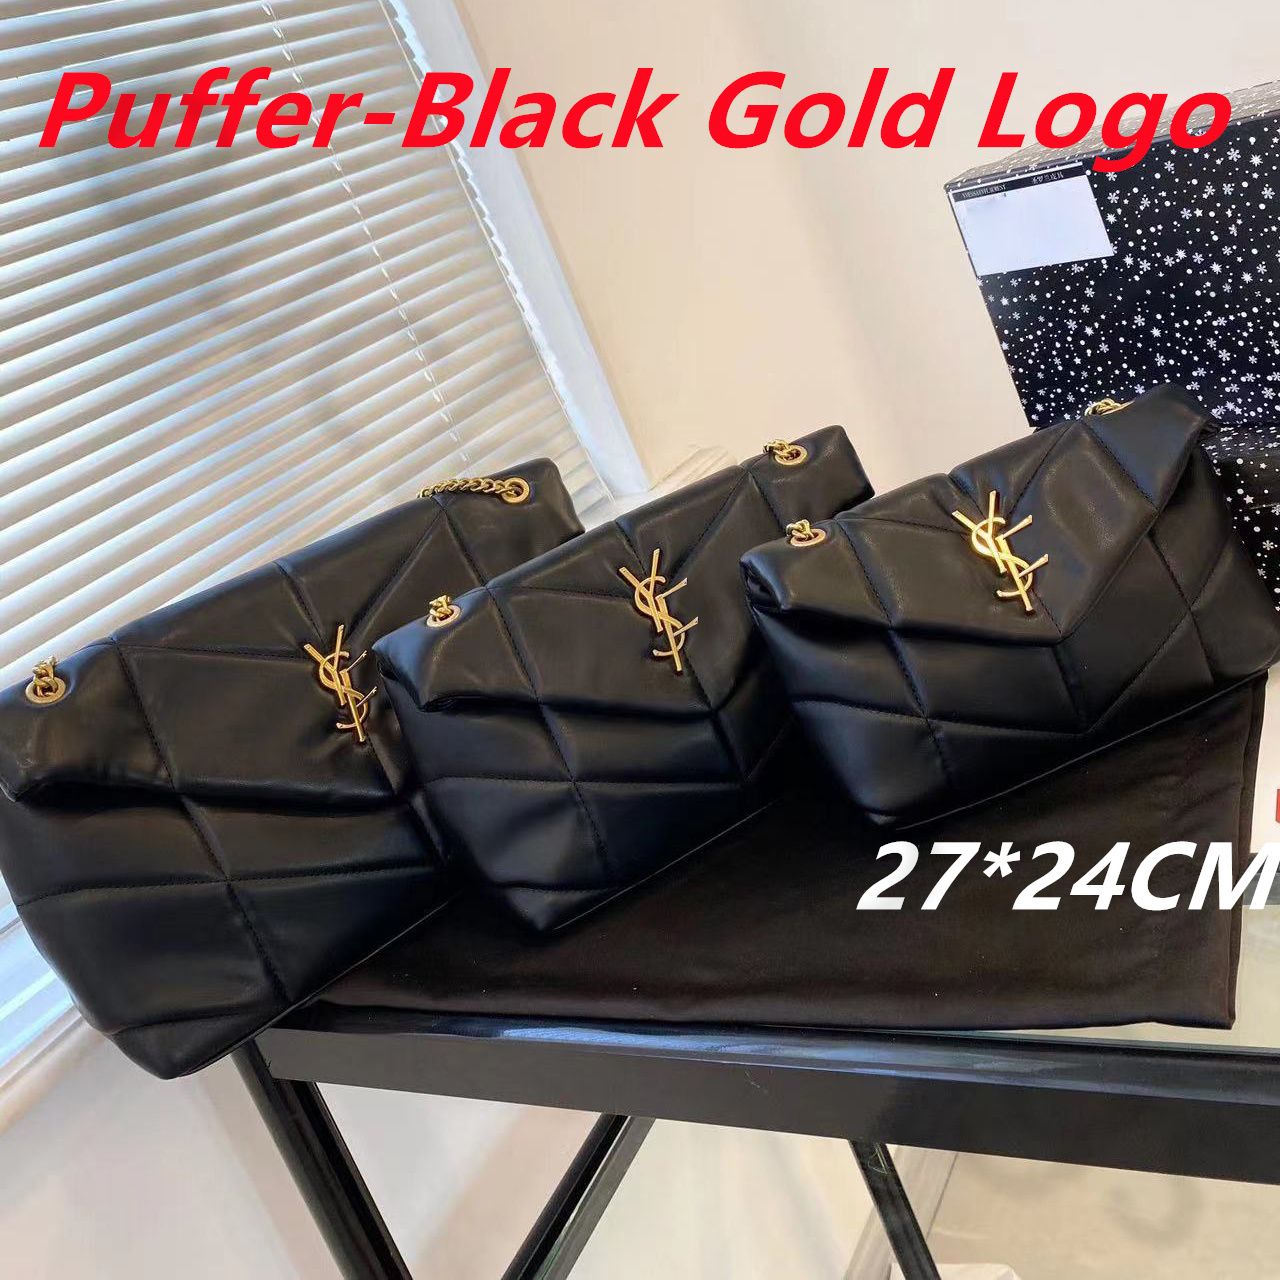 Puffer-Black Gold s